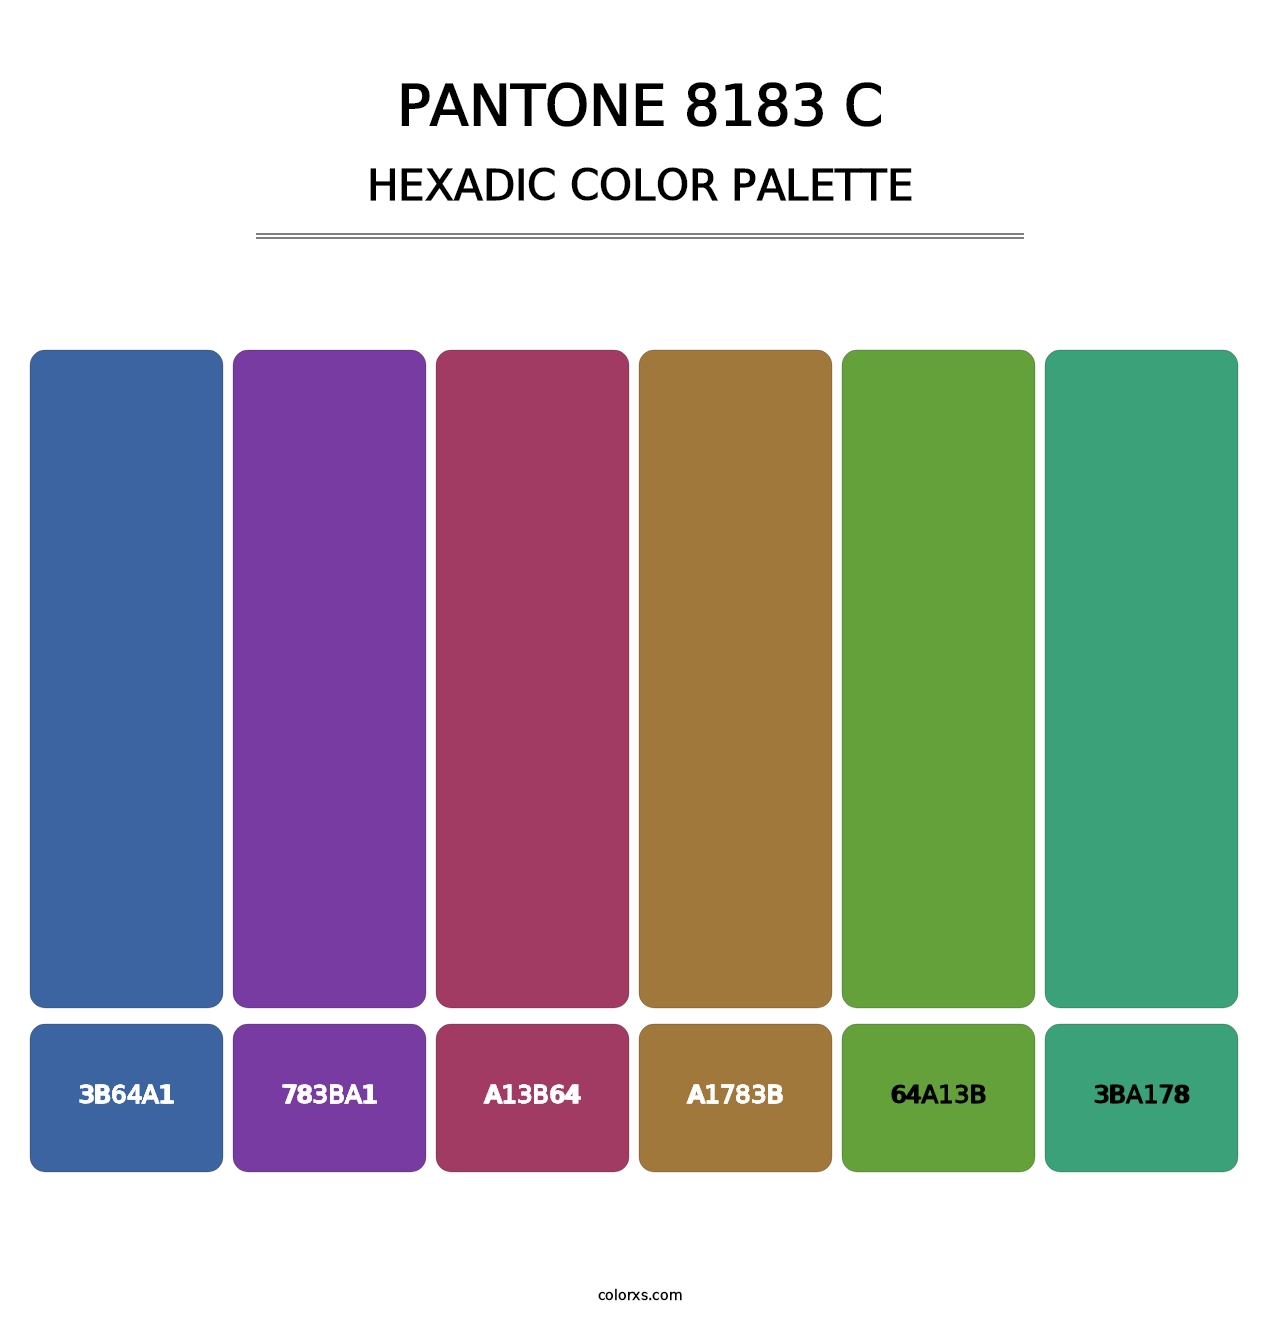 PANTONE 8183 C - Hexadic Color Palette